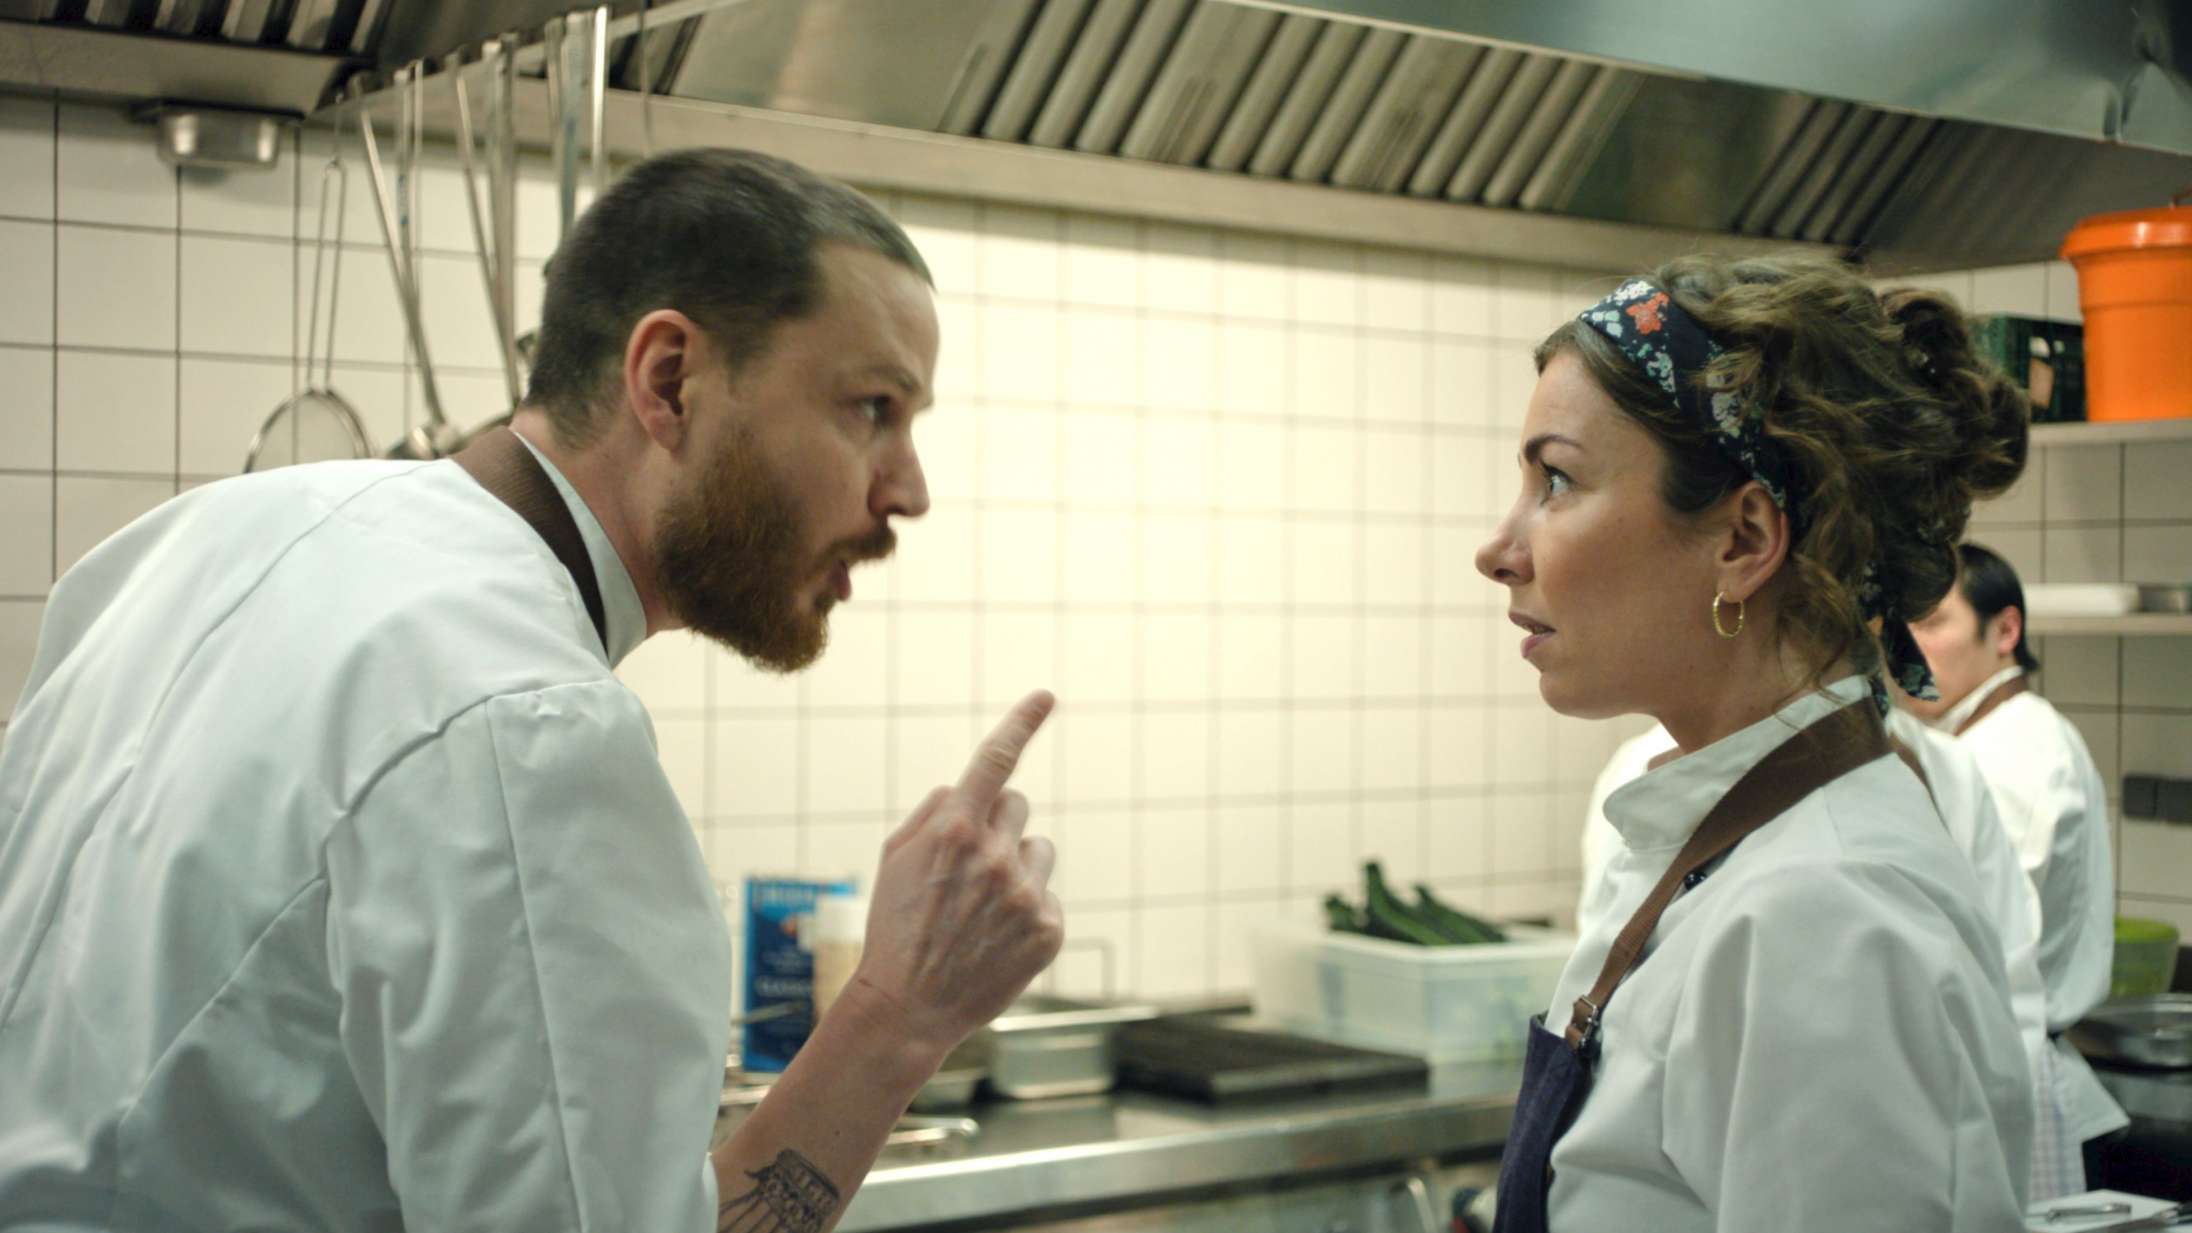 Julie Rudbæk og Jesper Zuschlag står eksplosivt i køkkenet i traileren til DR-serien ‘Bag enhver mand’